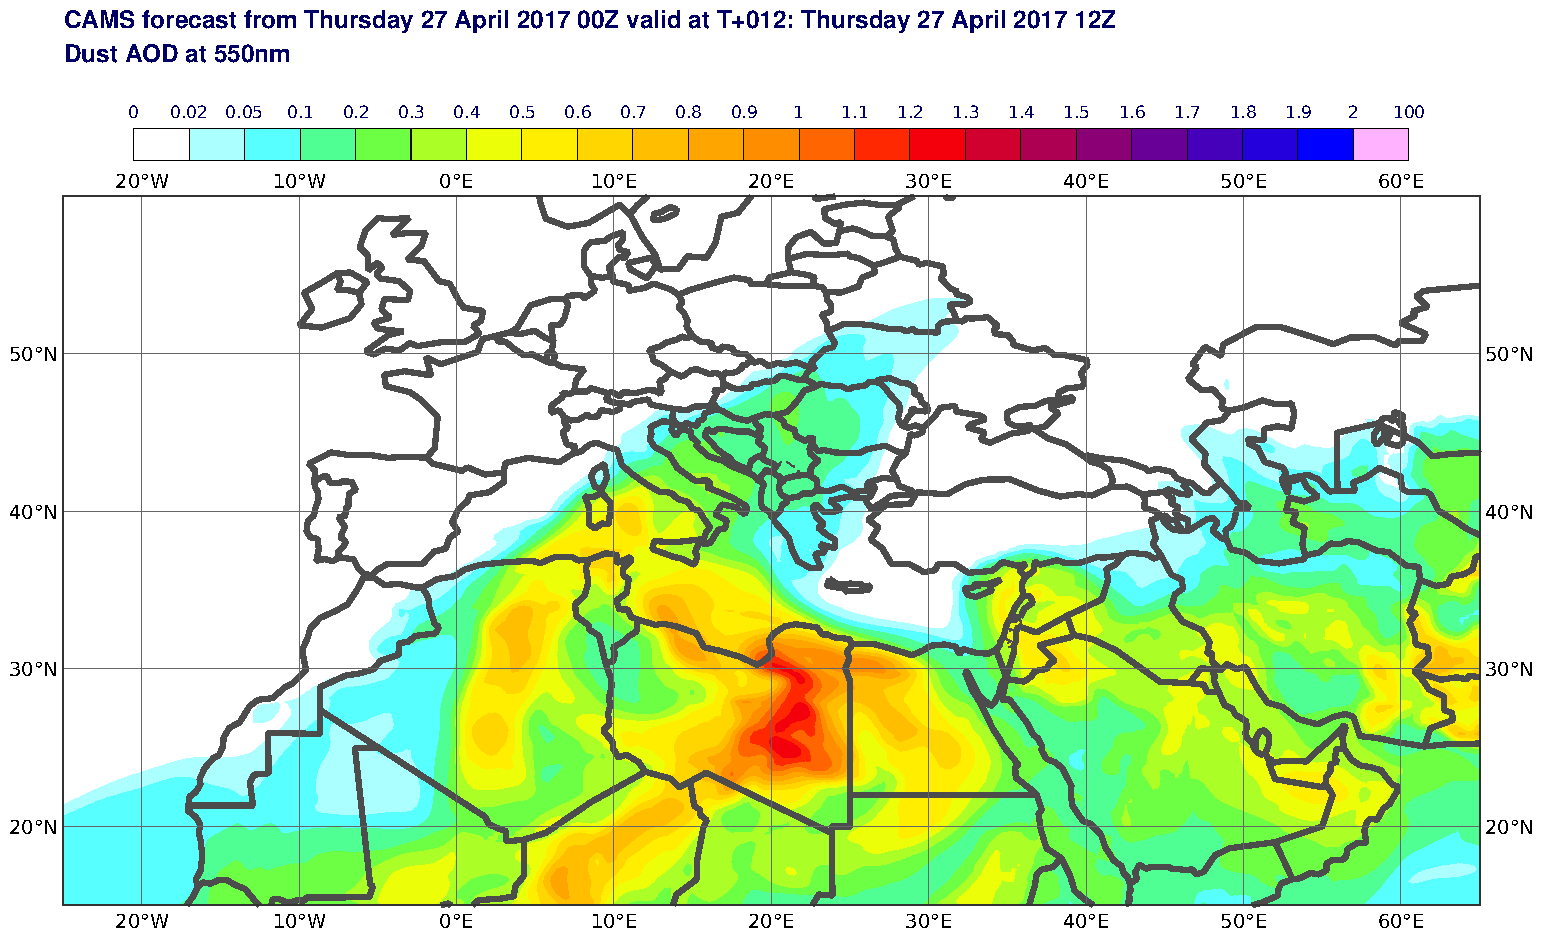 Dust AOD at 550nm valid at T12 - 2017-04-27 12:00